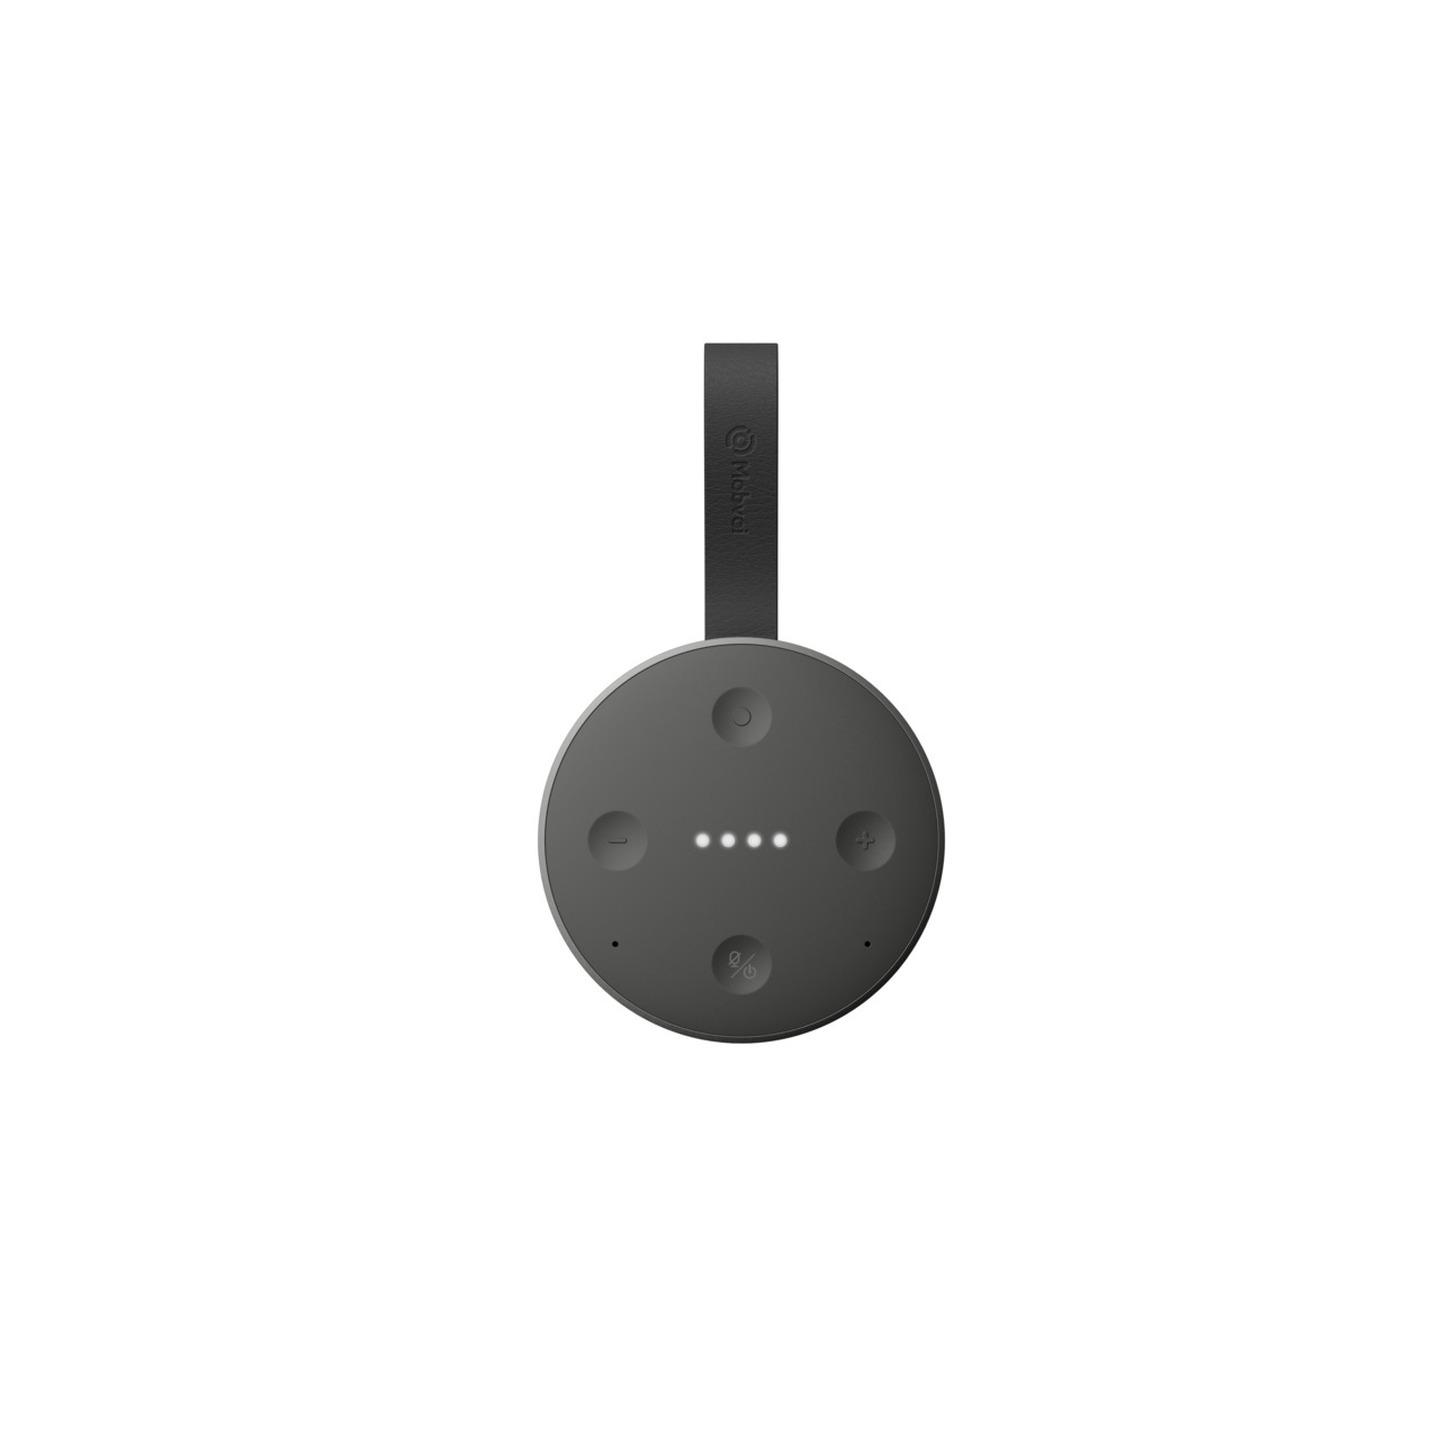 TicHome Mini Smart Speaker Black with Google Assistant